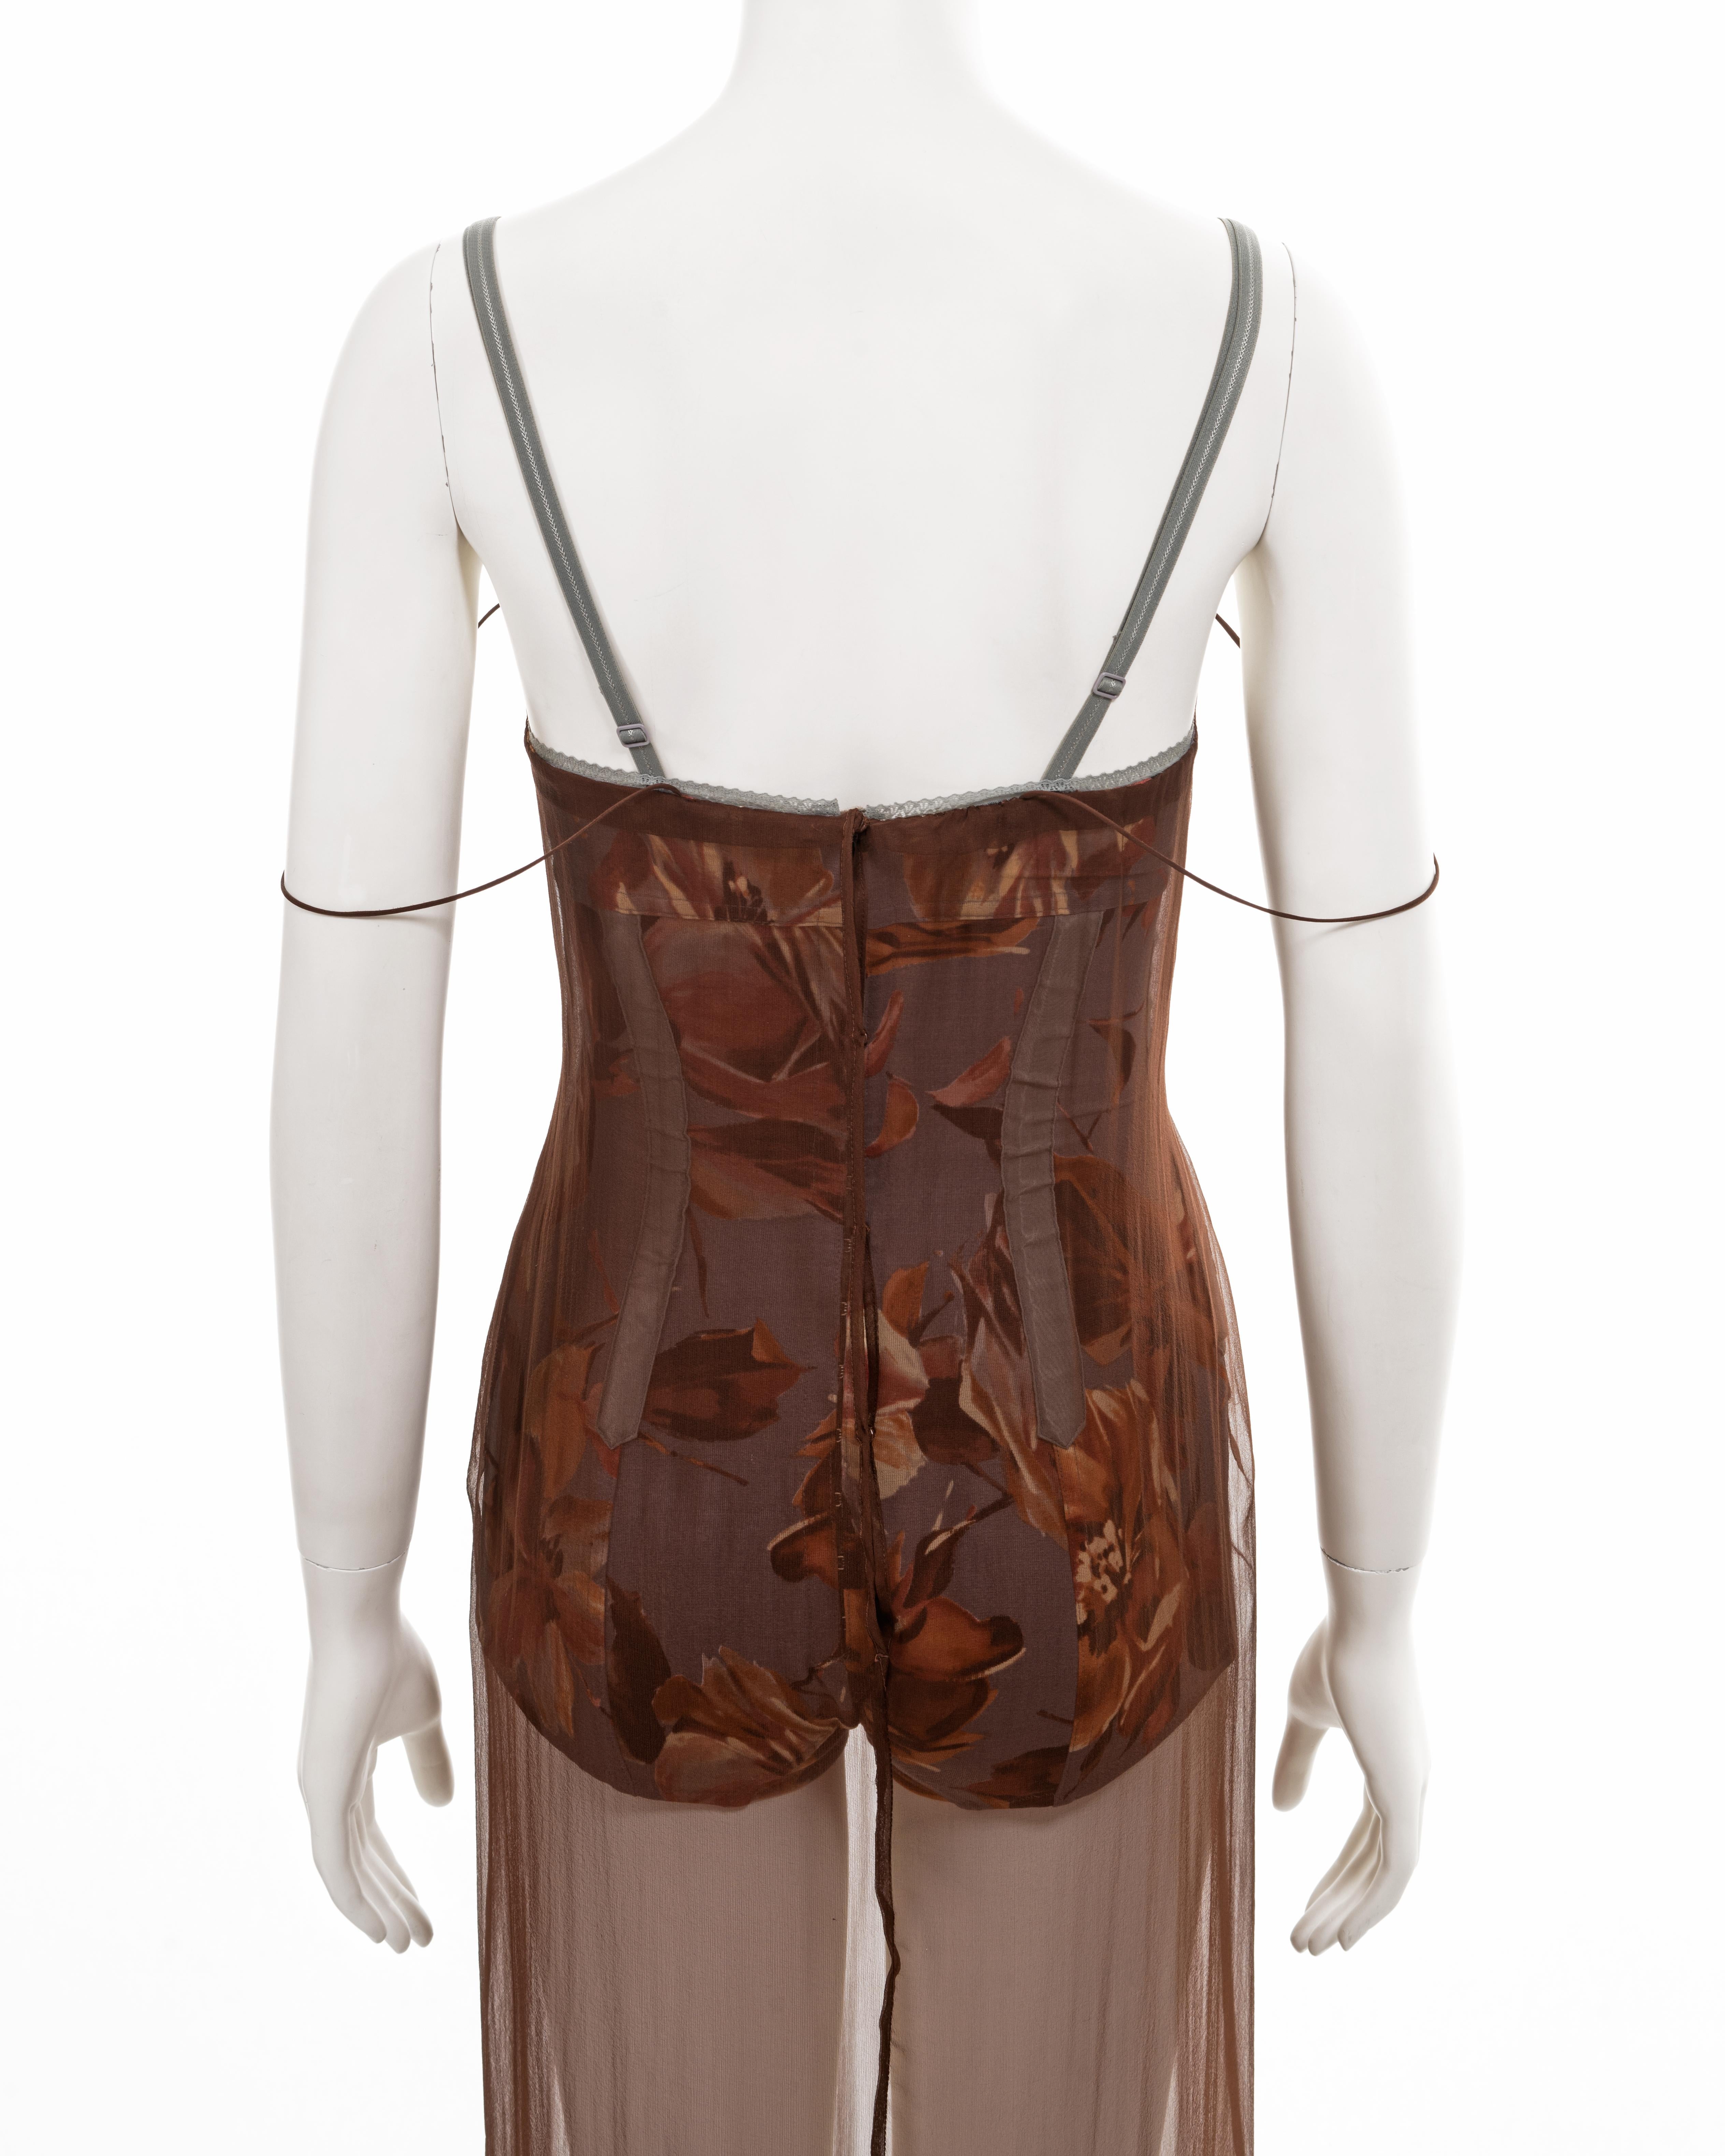 Dolce & Gabbana brown silk chiffon evening dress with built-in bodysuit, ss 1997 7